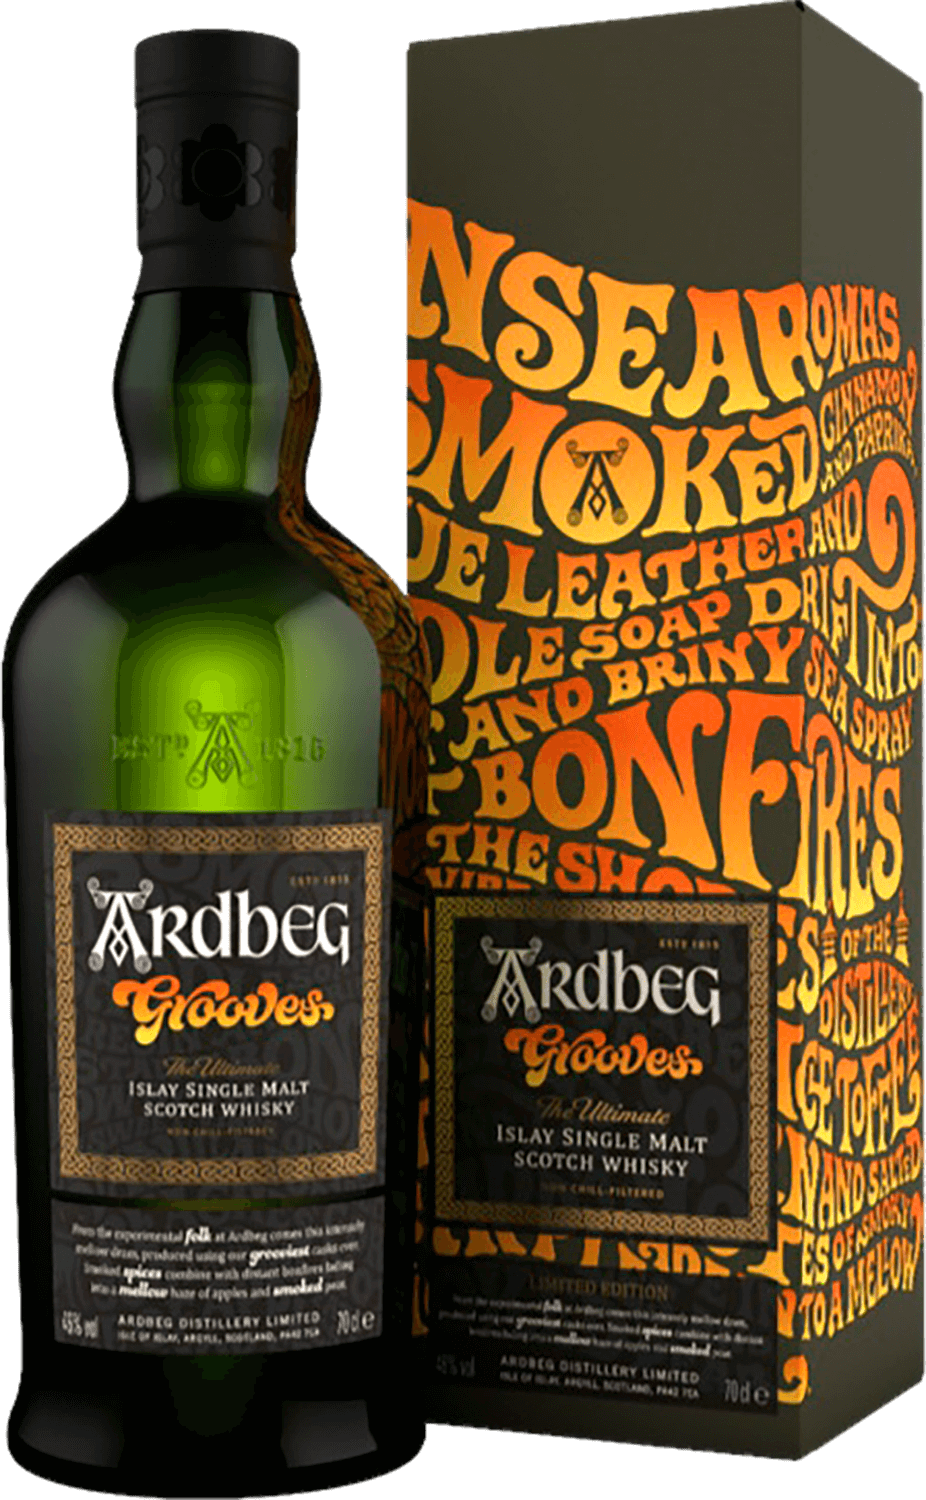 Ardbeg Grooves Islay Single Malt Scotch Whisky (gift box) bunnahabhain islay single malt scotch whisky 12 y o gift box